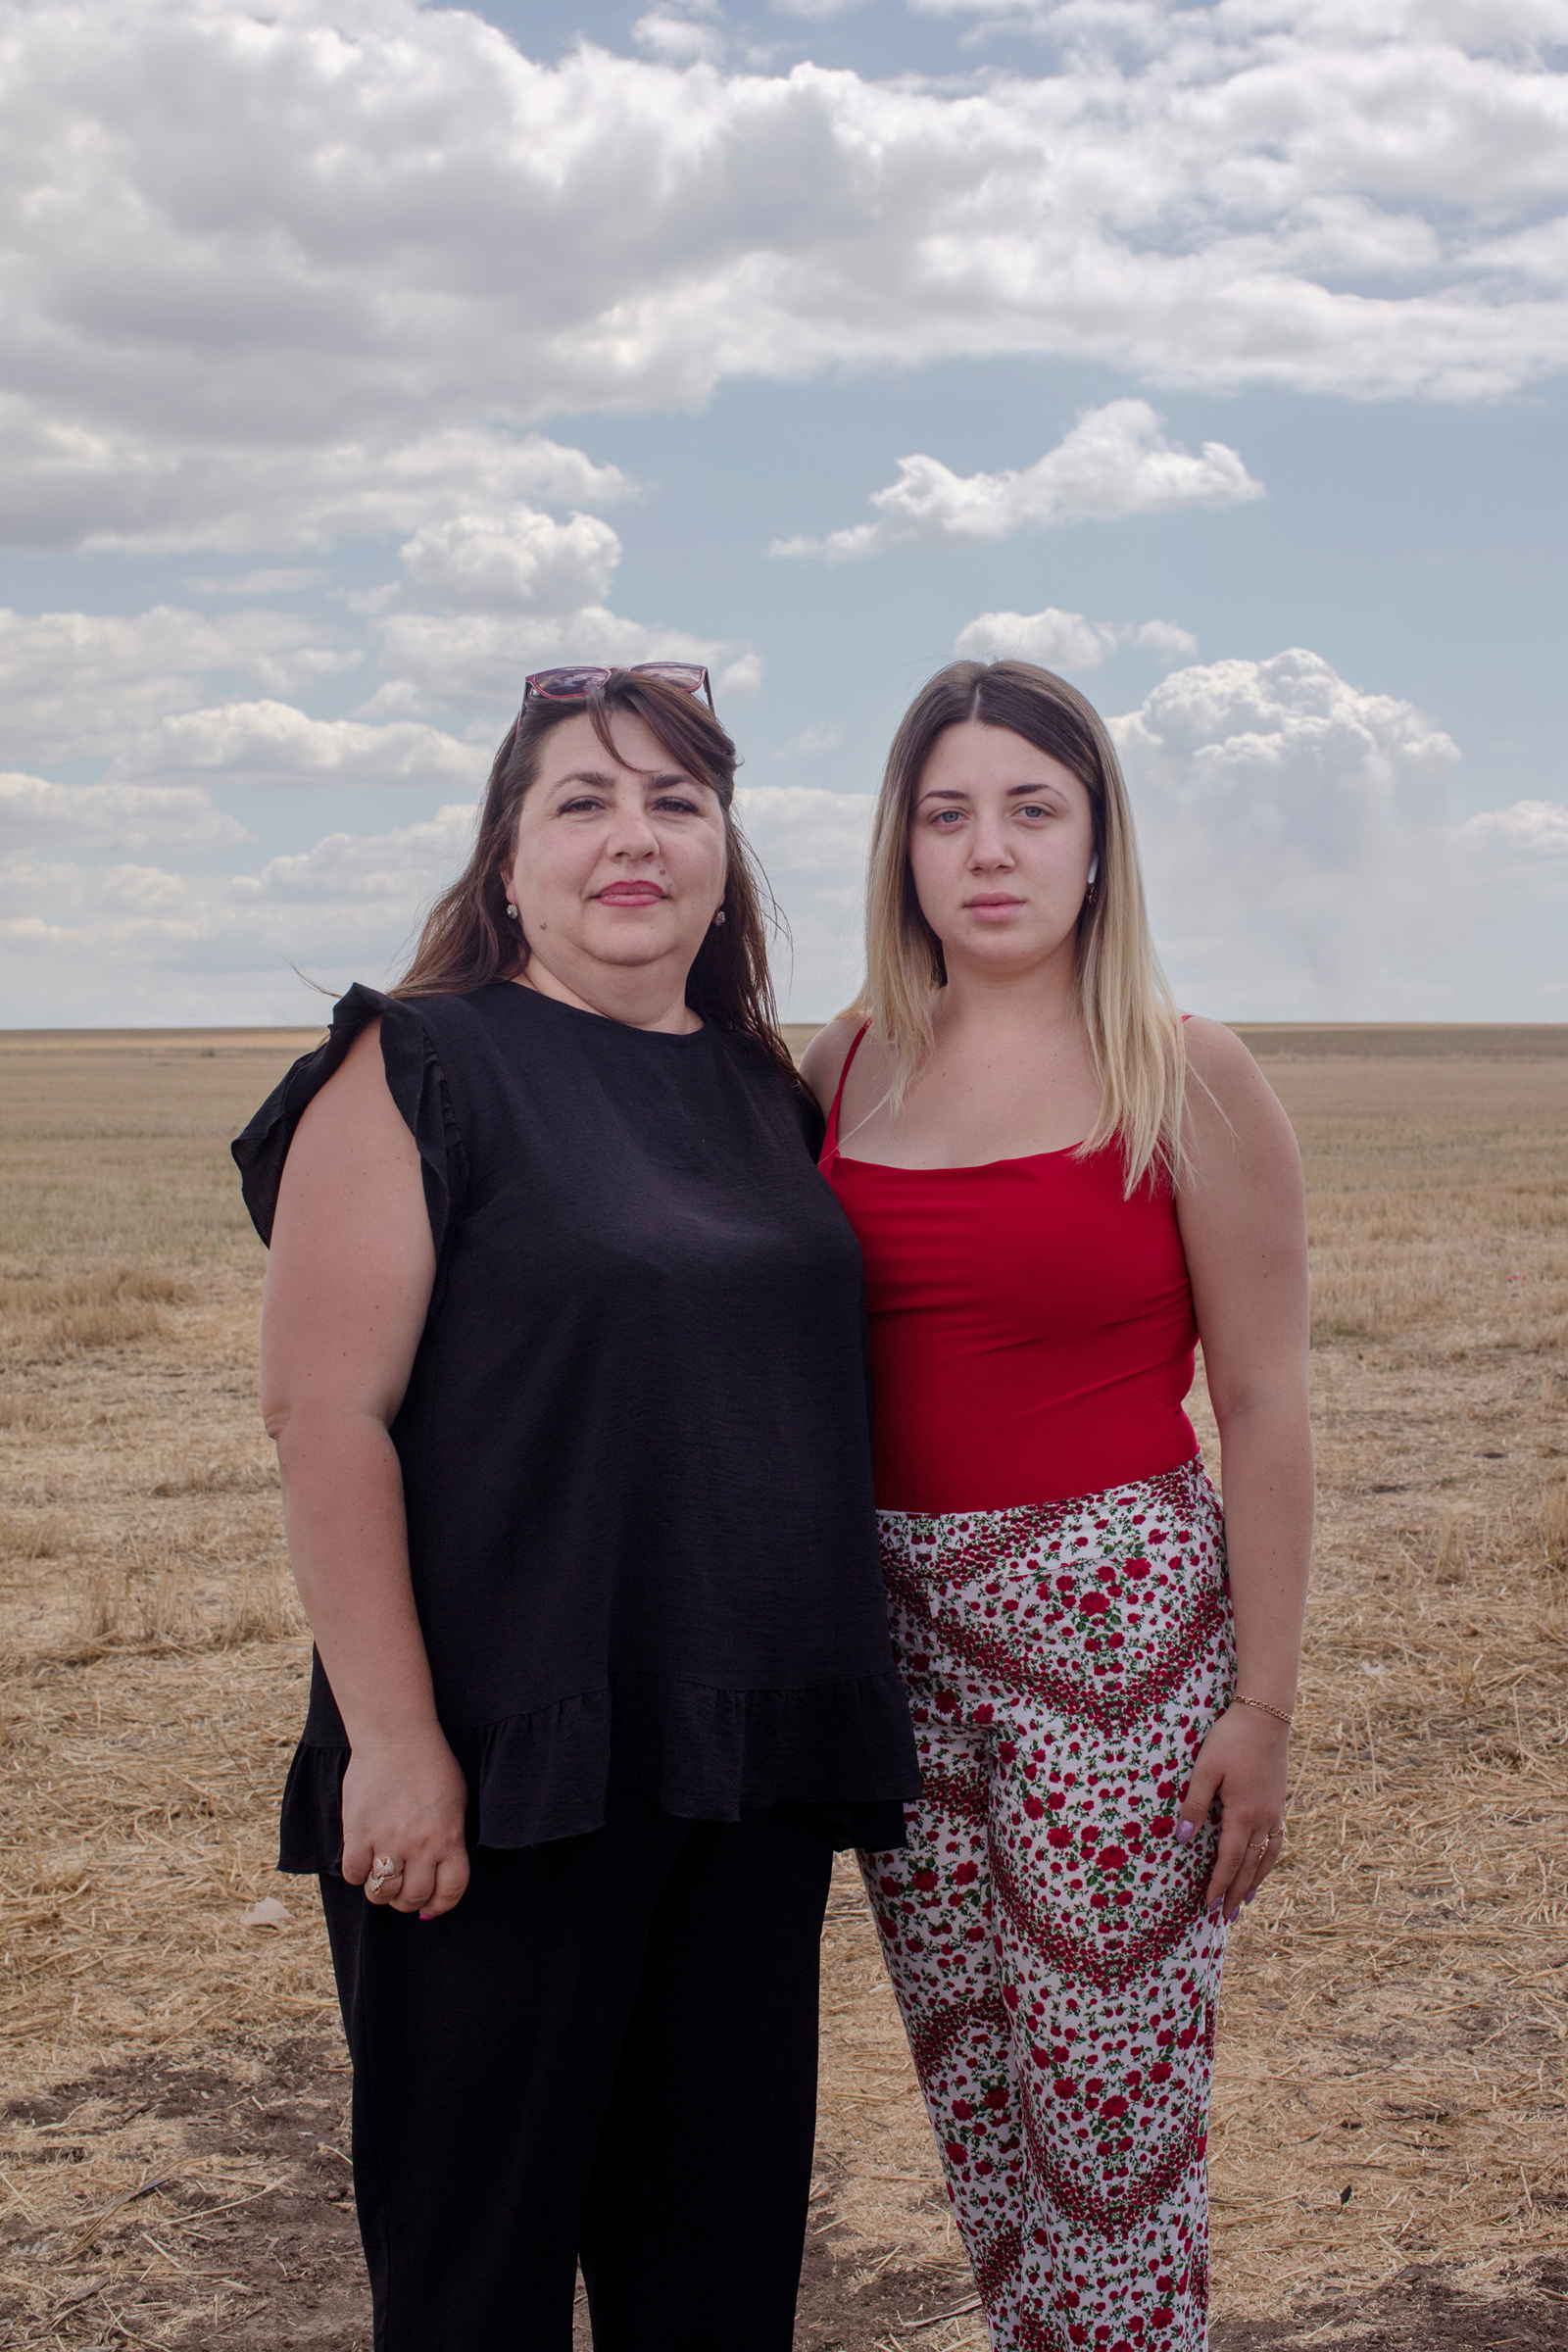 The Ukrainian Women Farmers Fighting to Keep the World Fed